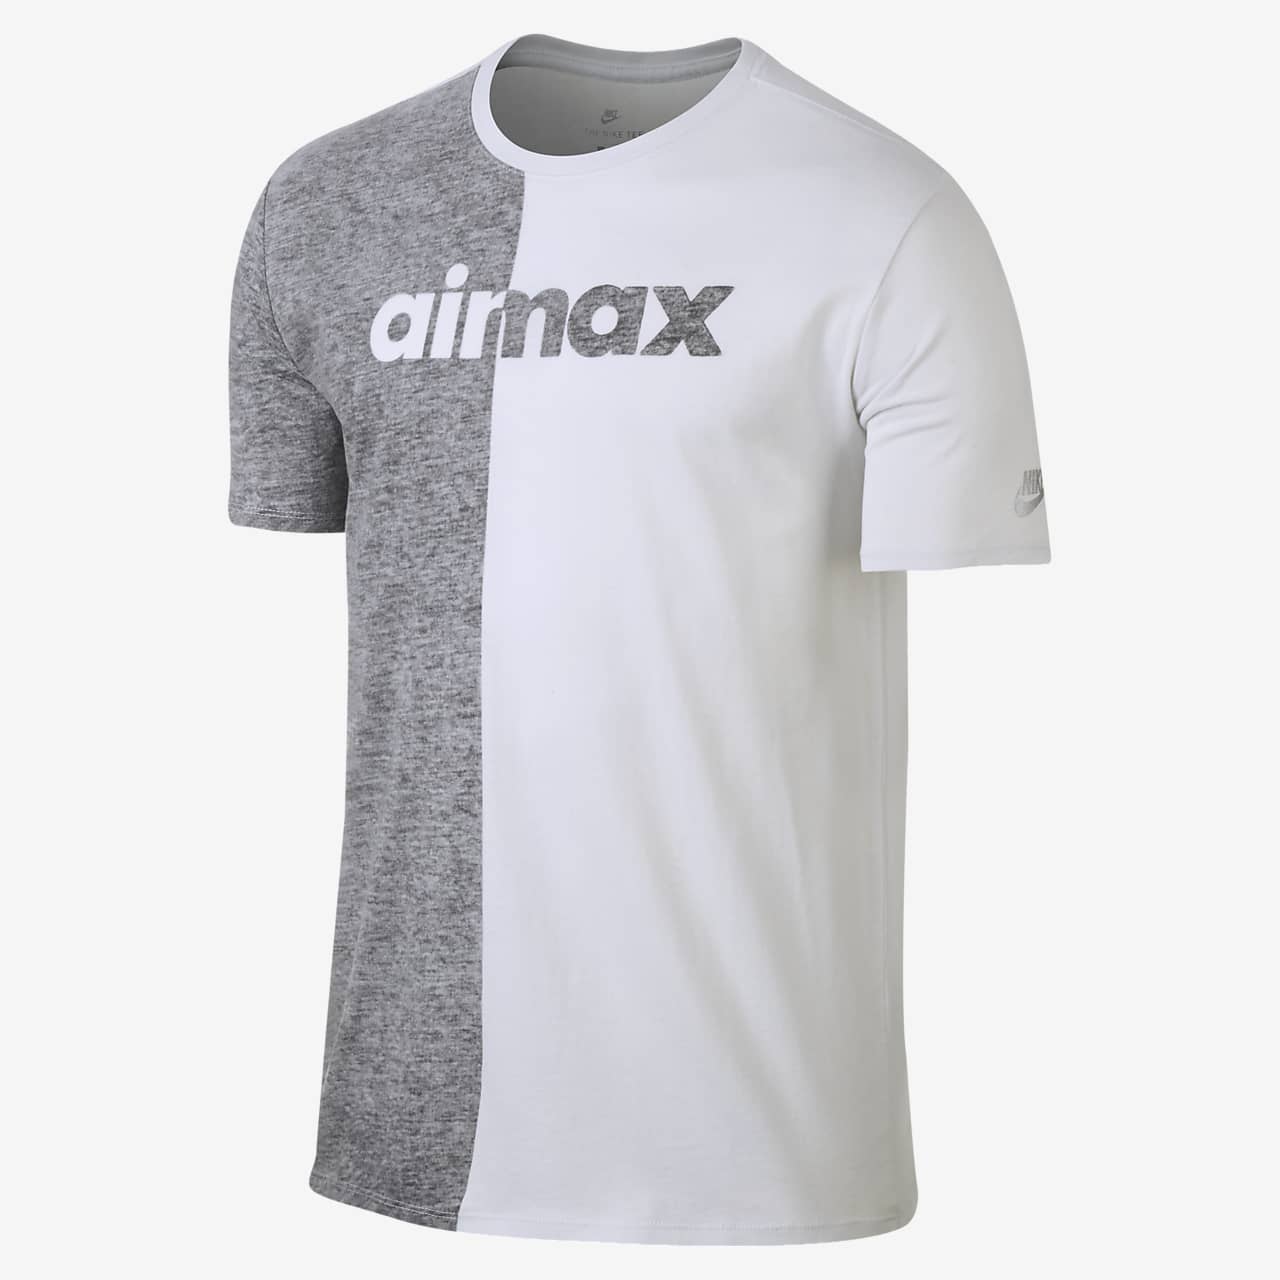 Nike Sportswear Air Max Men's T-Shirt فيراري جيب